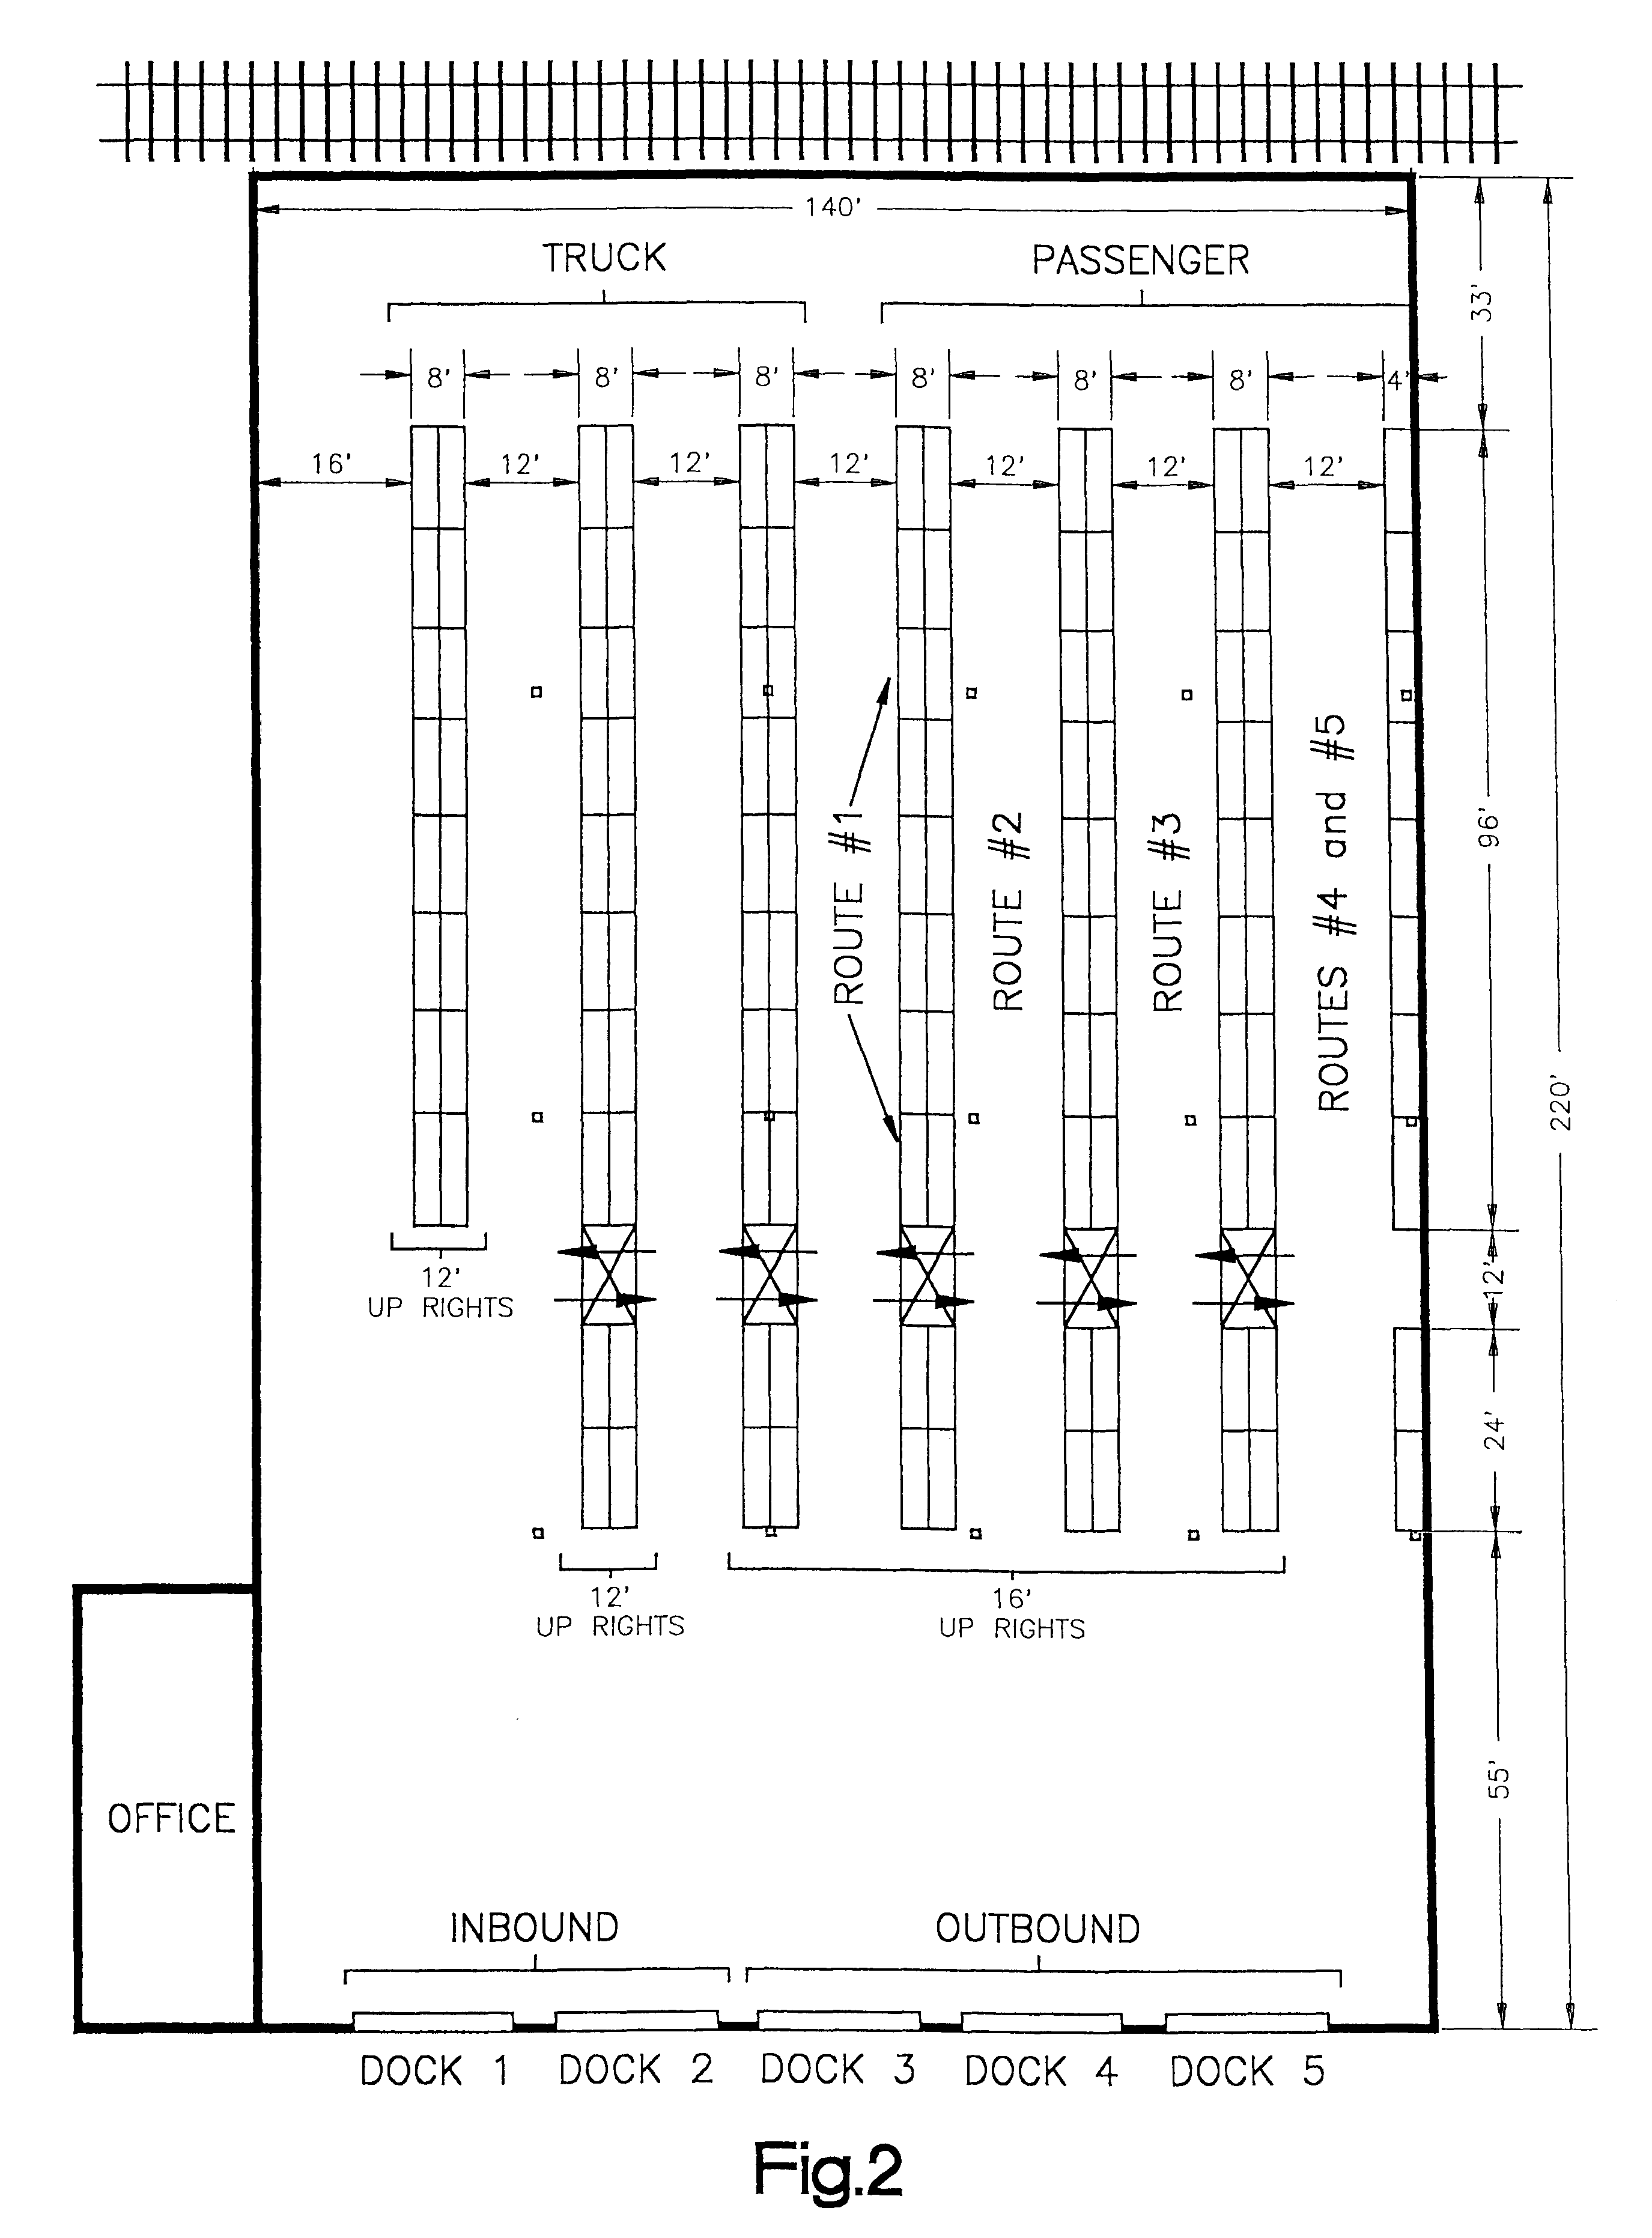 Standard parts metering system